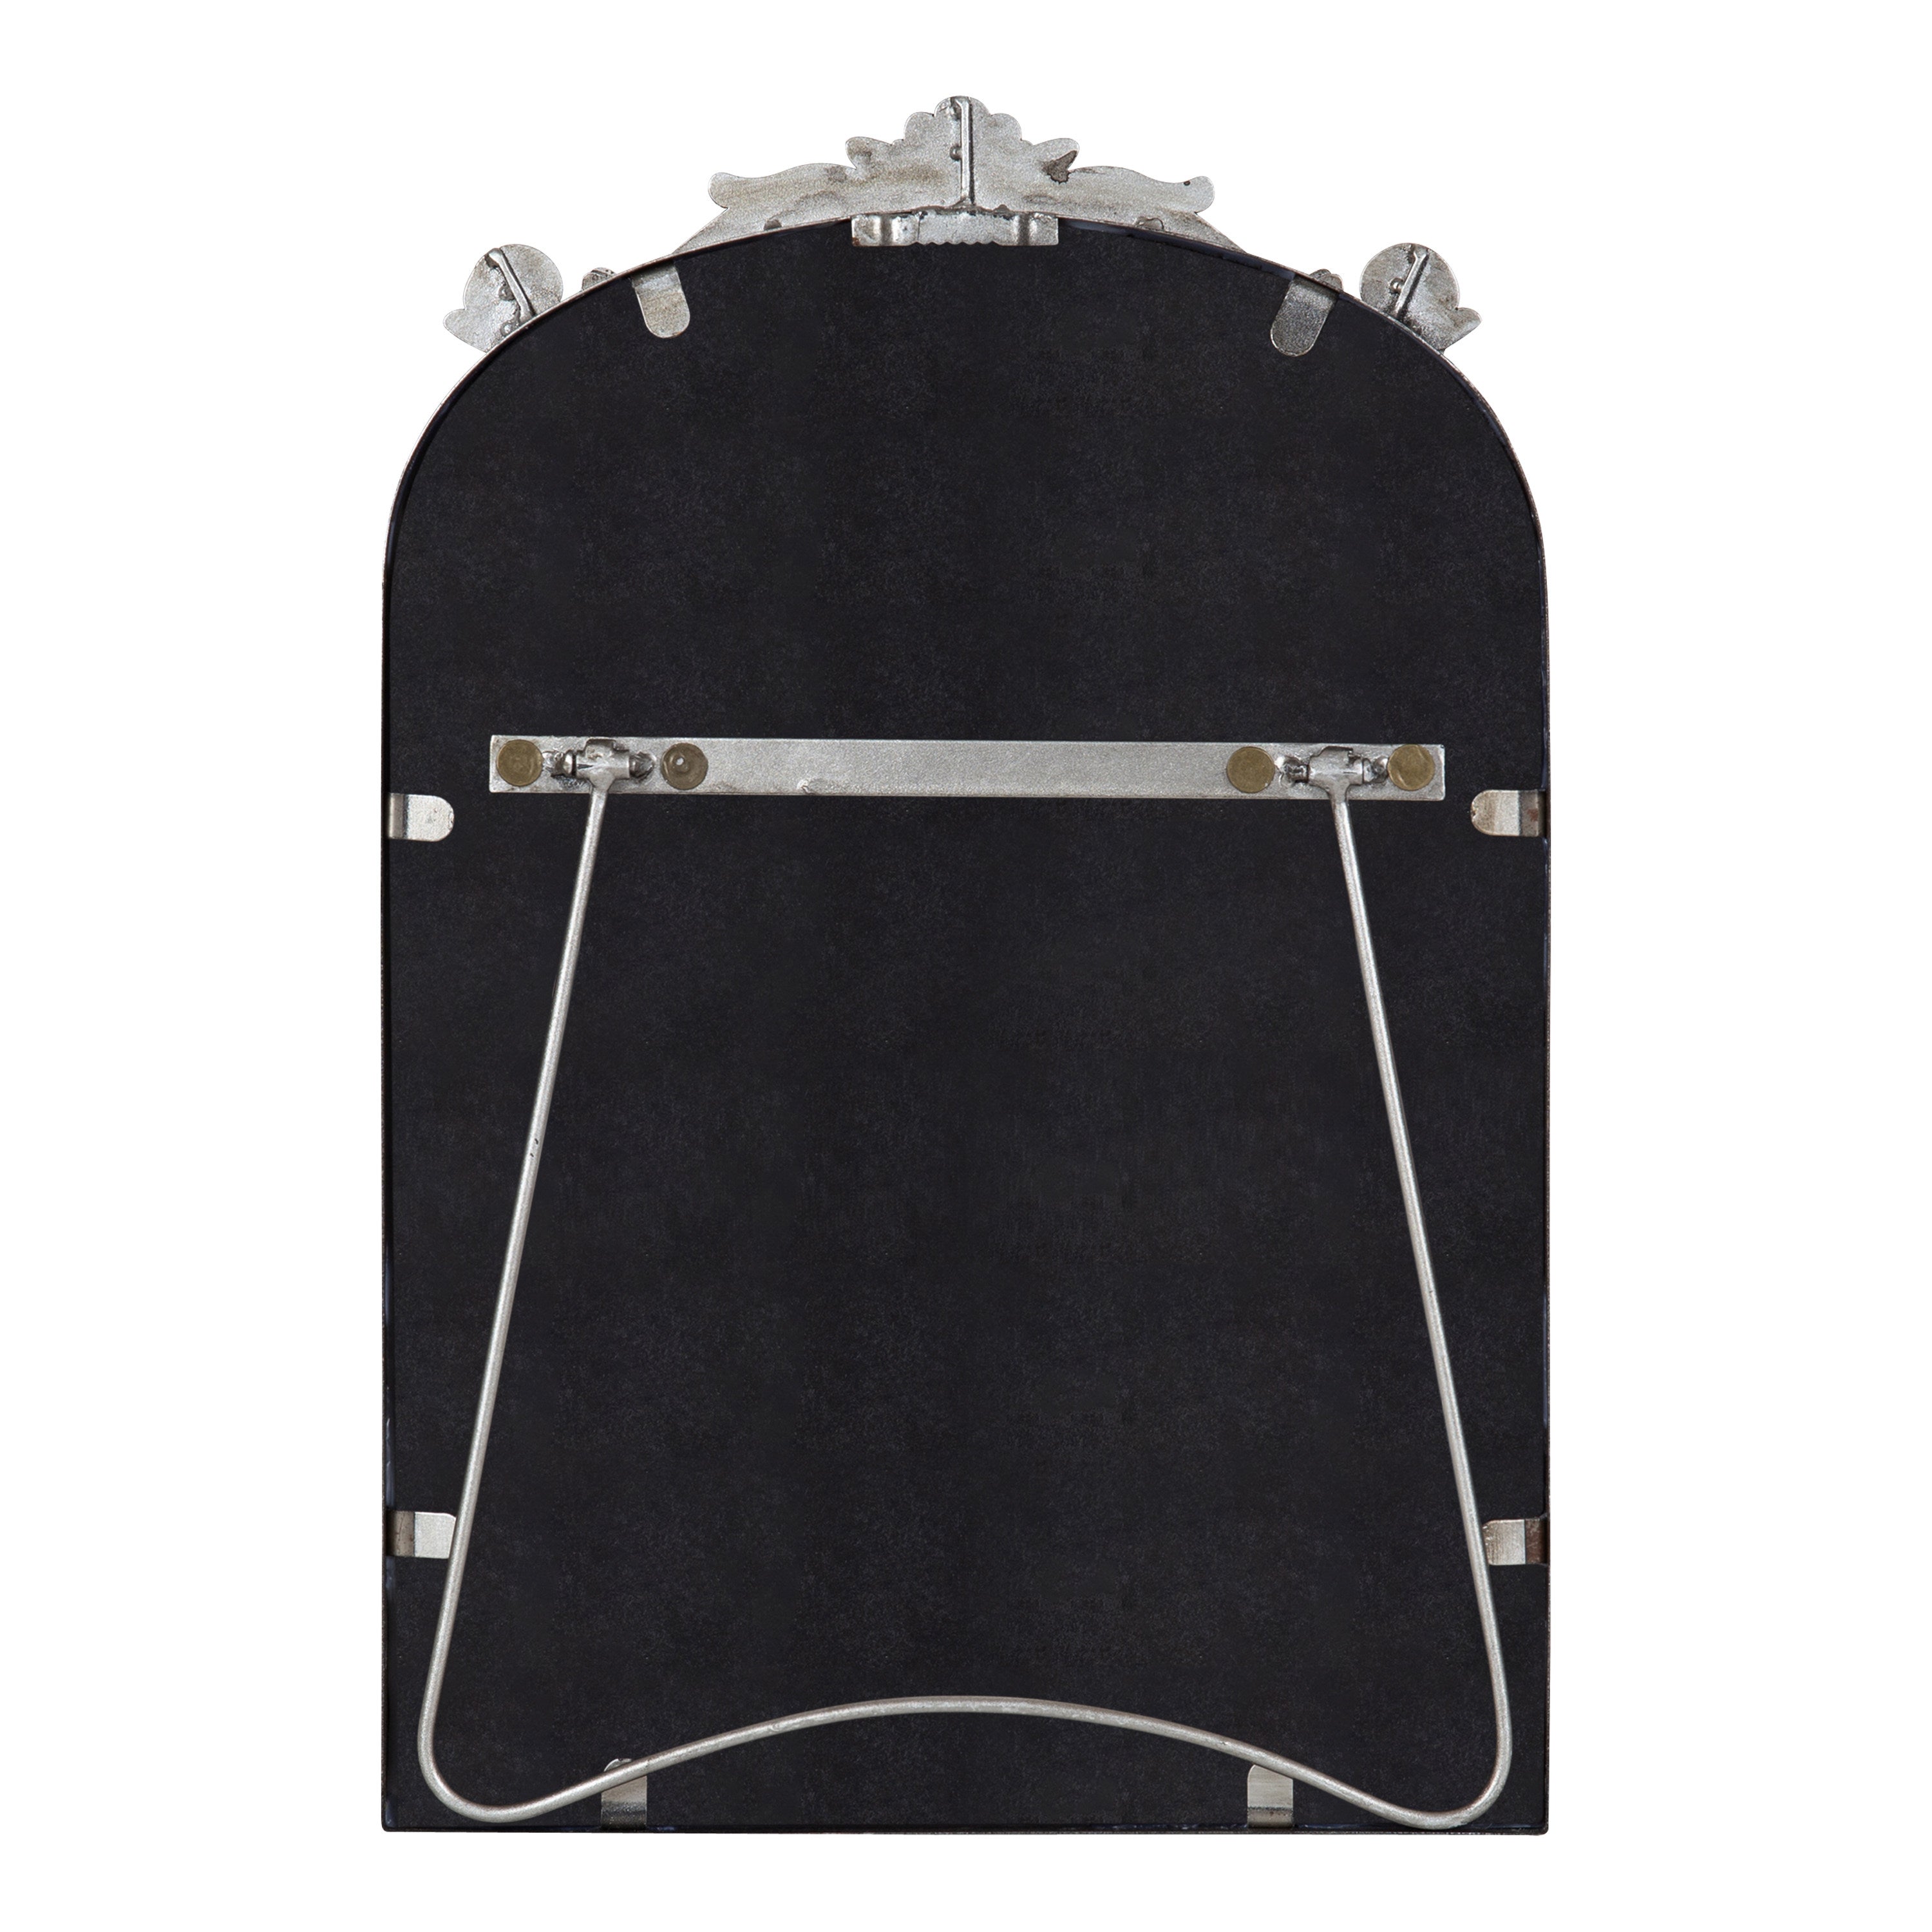 Arendahl Tabletop Arch Mirror